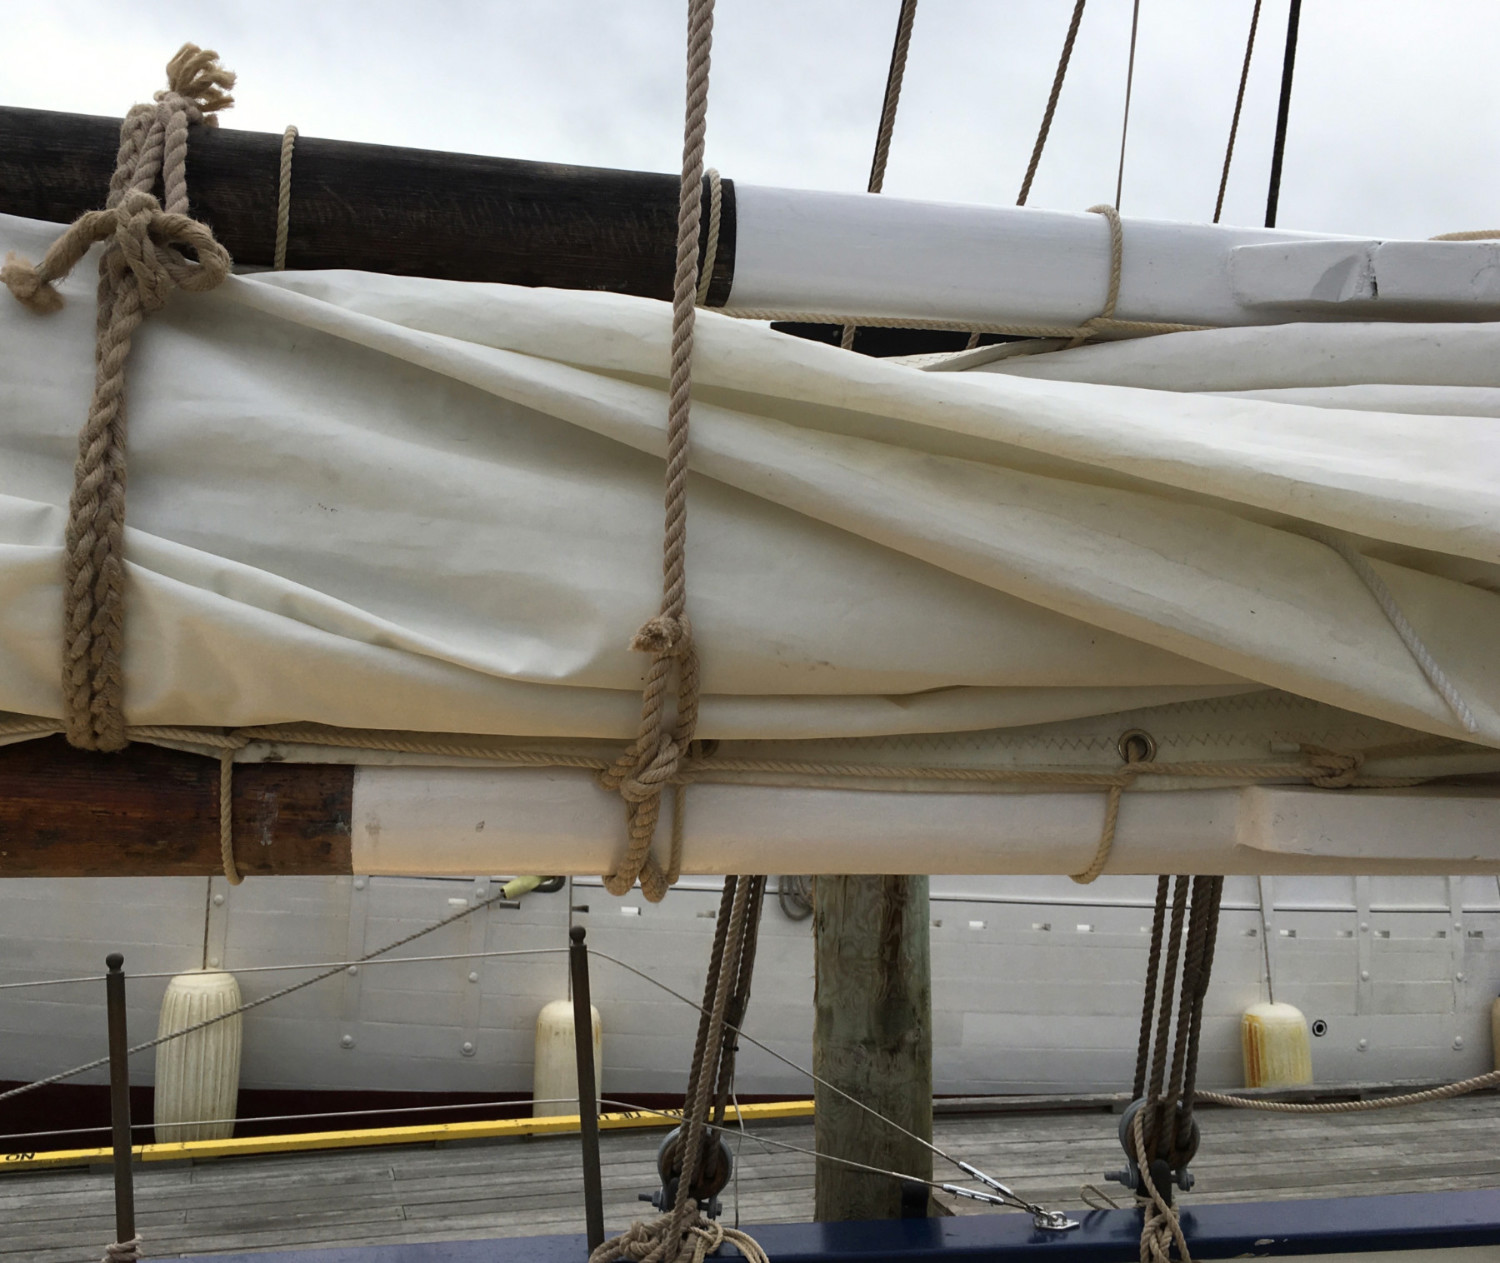 Schooner sails, masts and rope